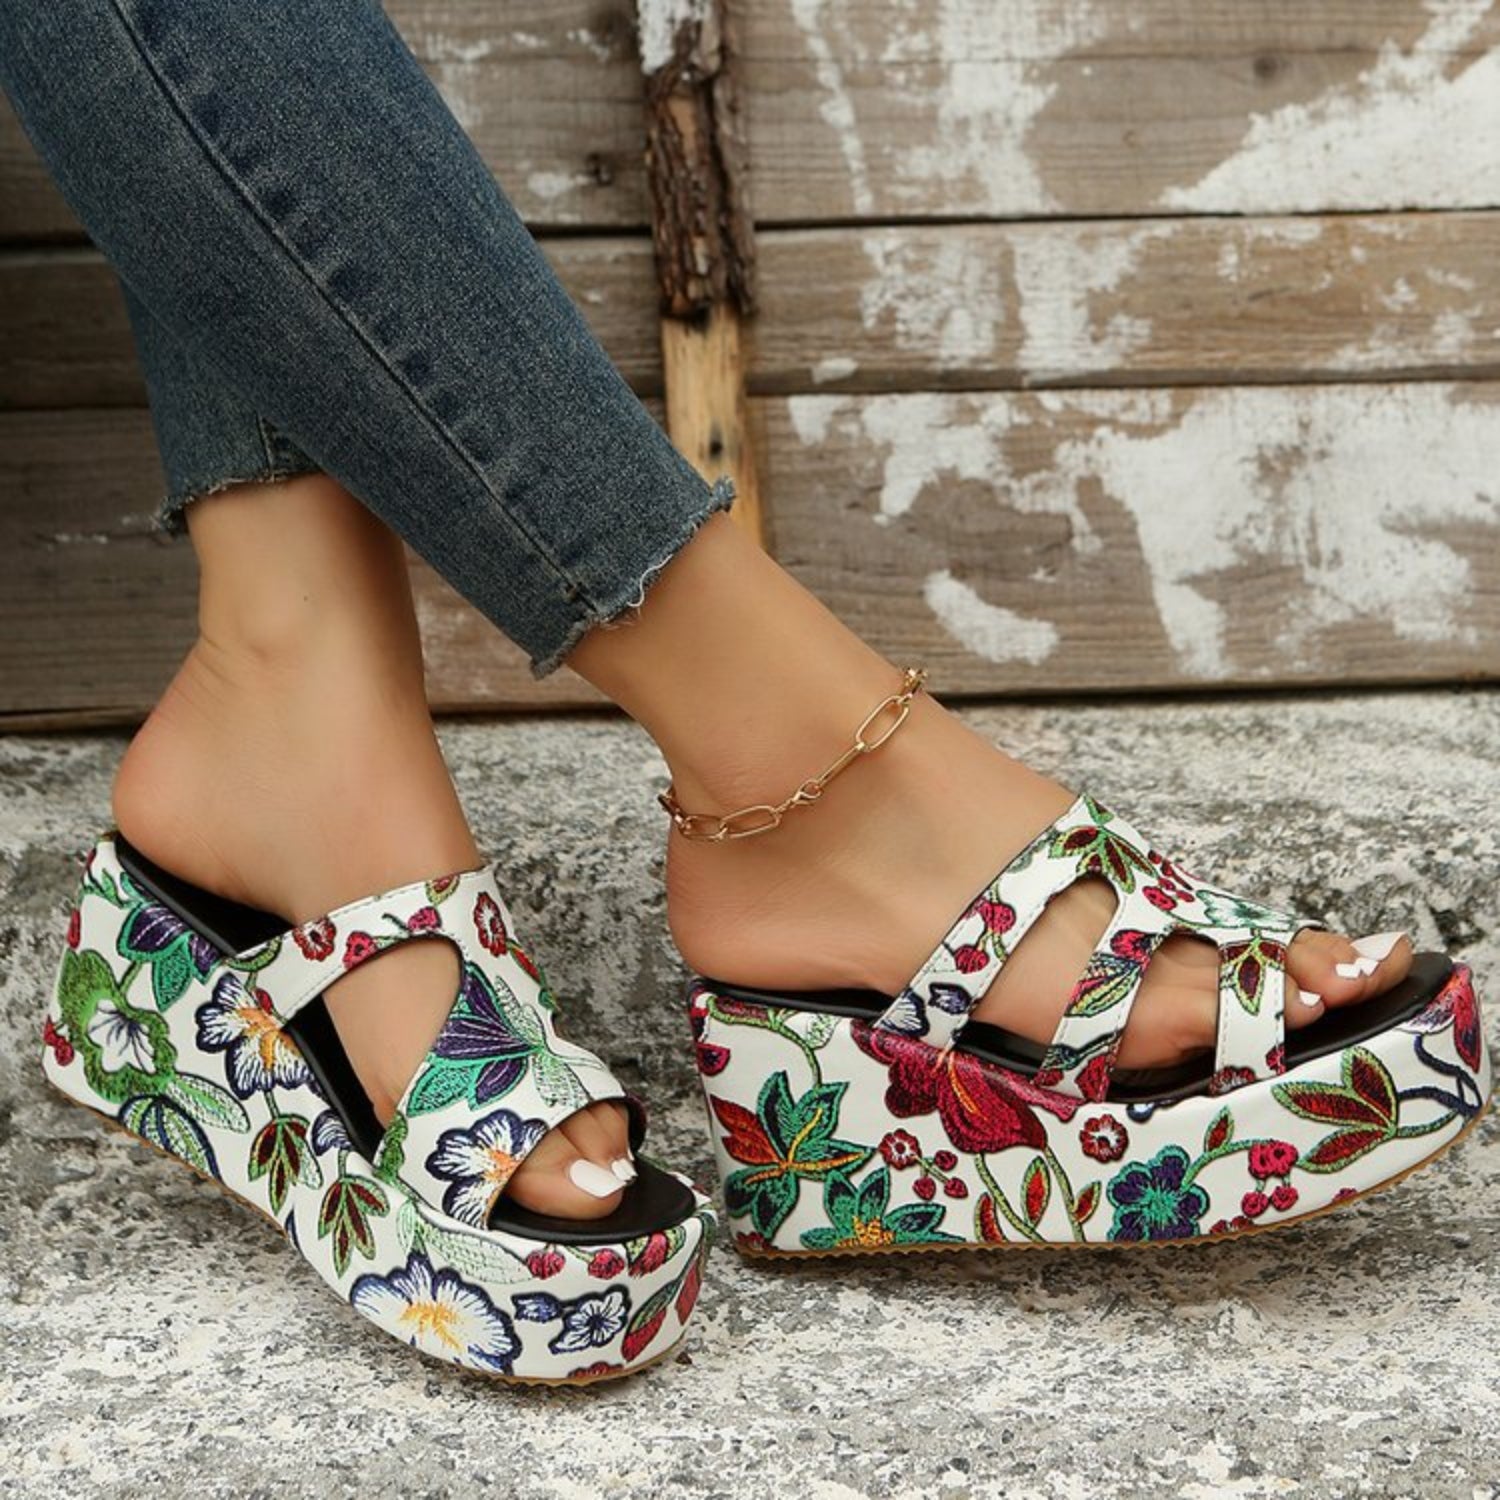 TEEK - Cutout Floral Peep Toe Sandals SHOES TEEK Trend   